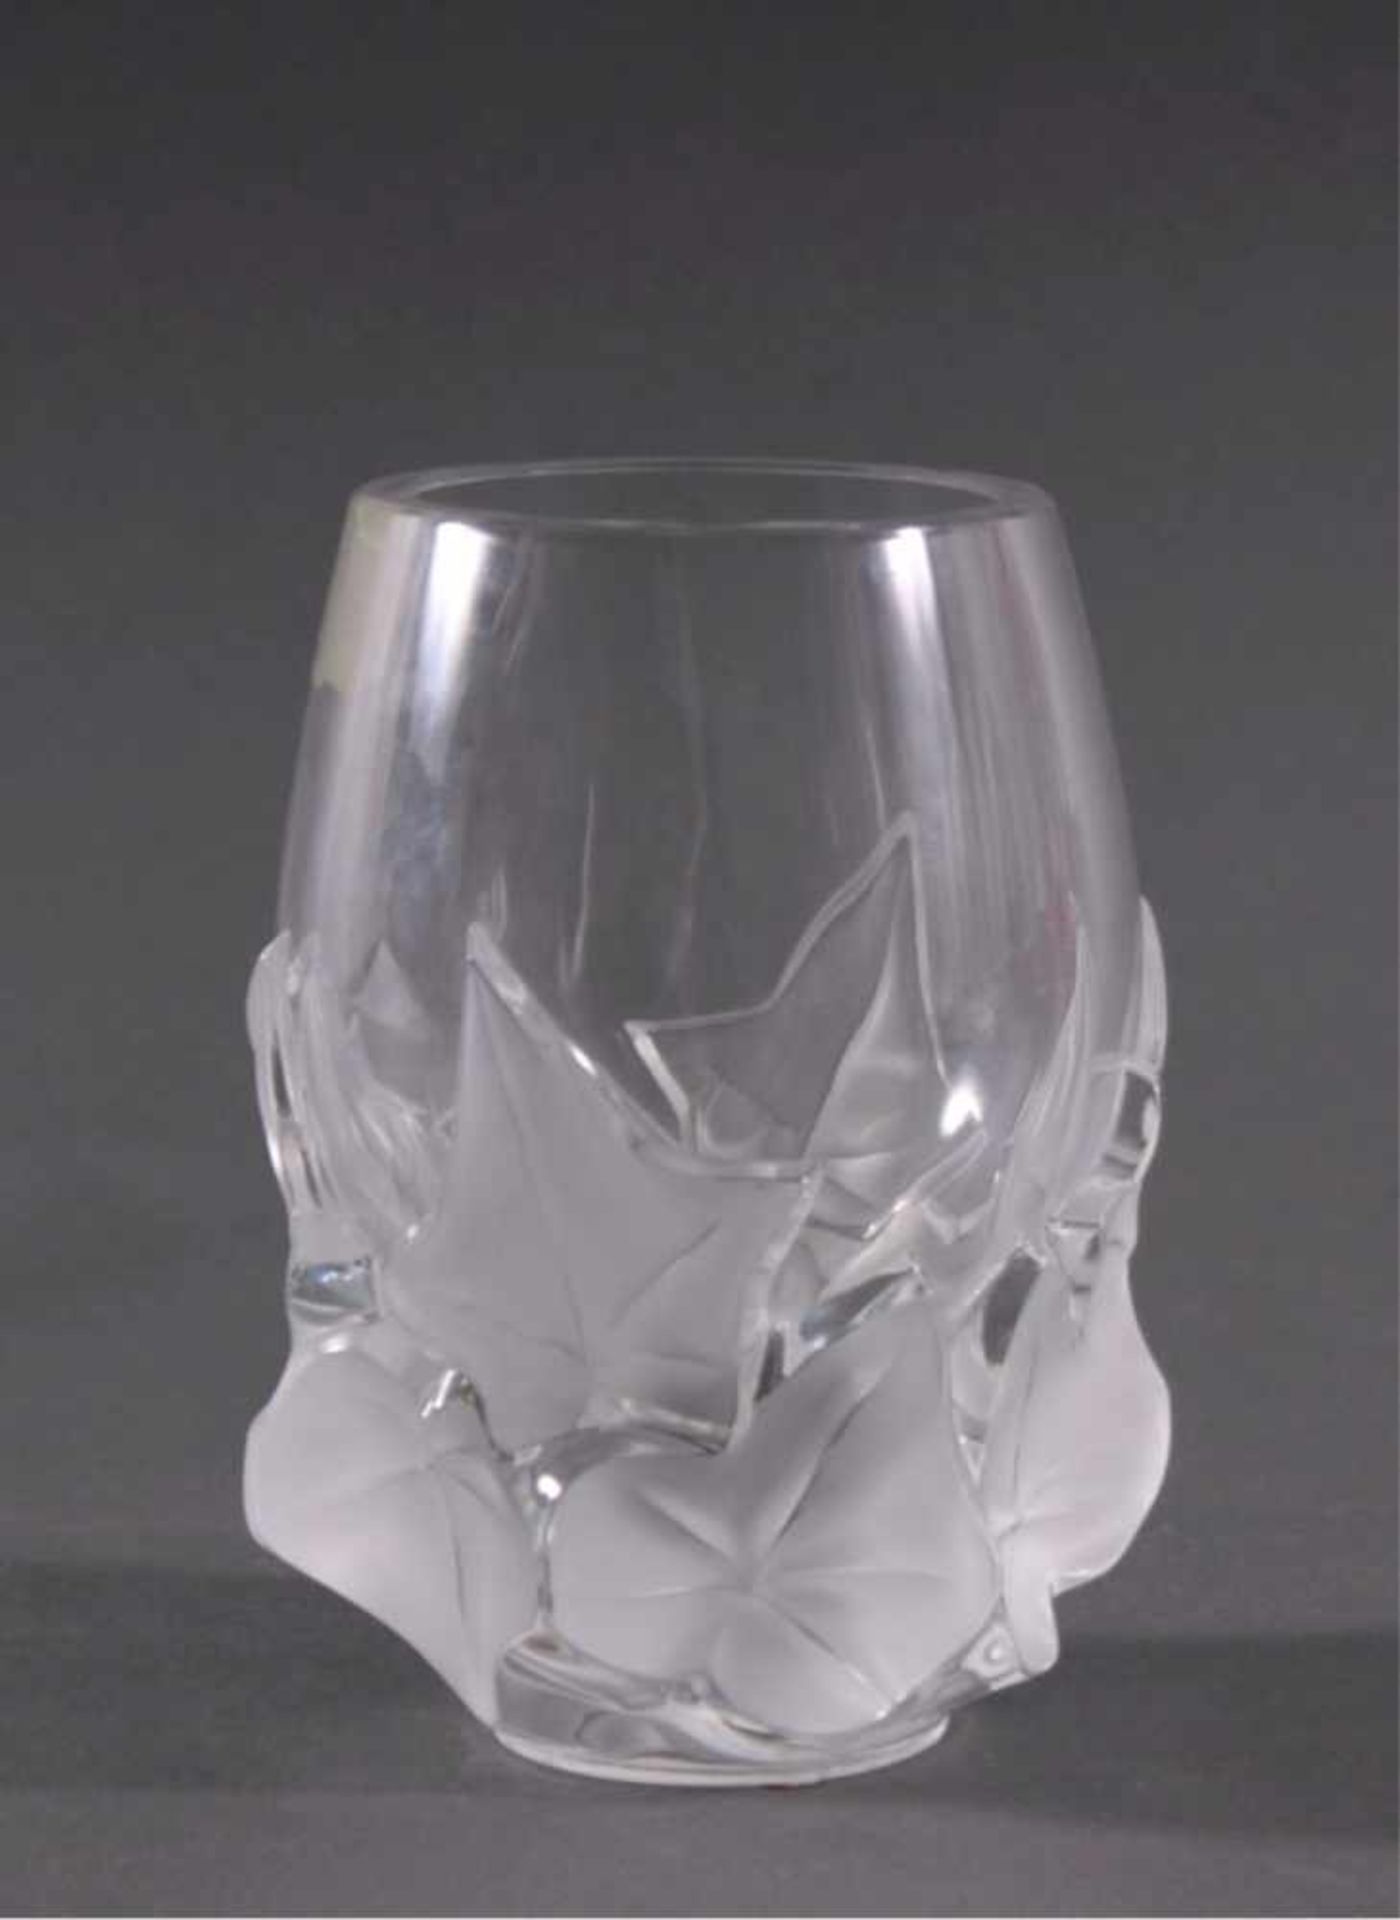 Vase, "Hedera" - Lalique Paris Cristal20. Jahrhundert, farbloses Kristallglas, partiell satiniert,im